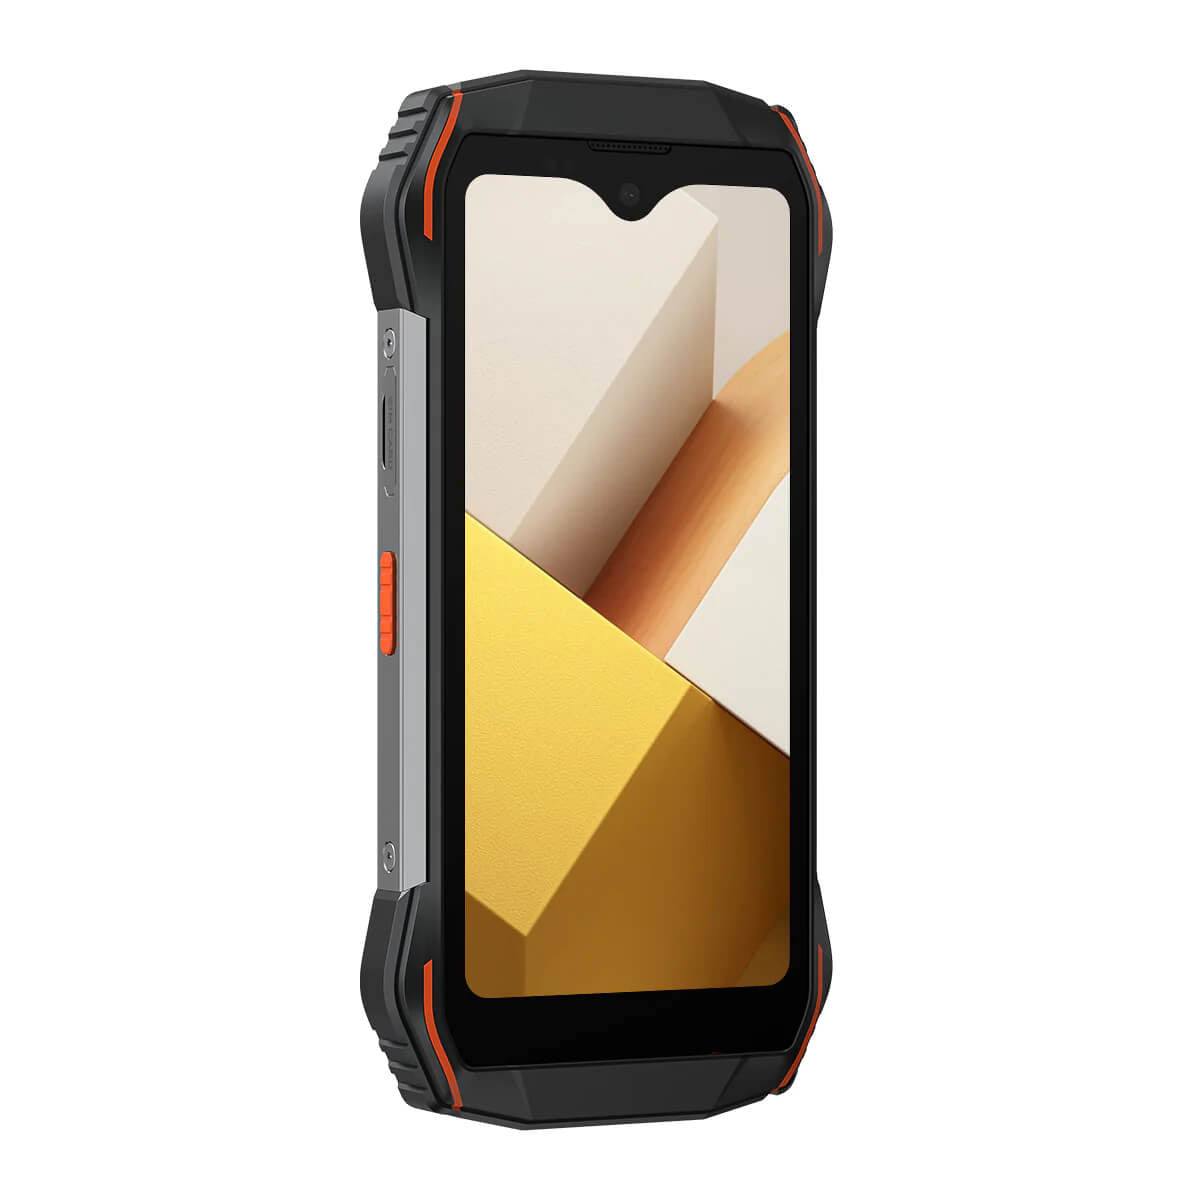 Blackview pametni robustni telefon N6000 8/256GB, oranžen